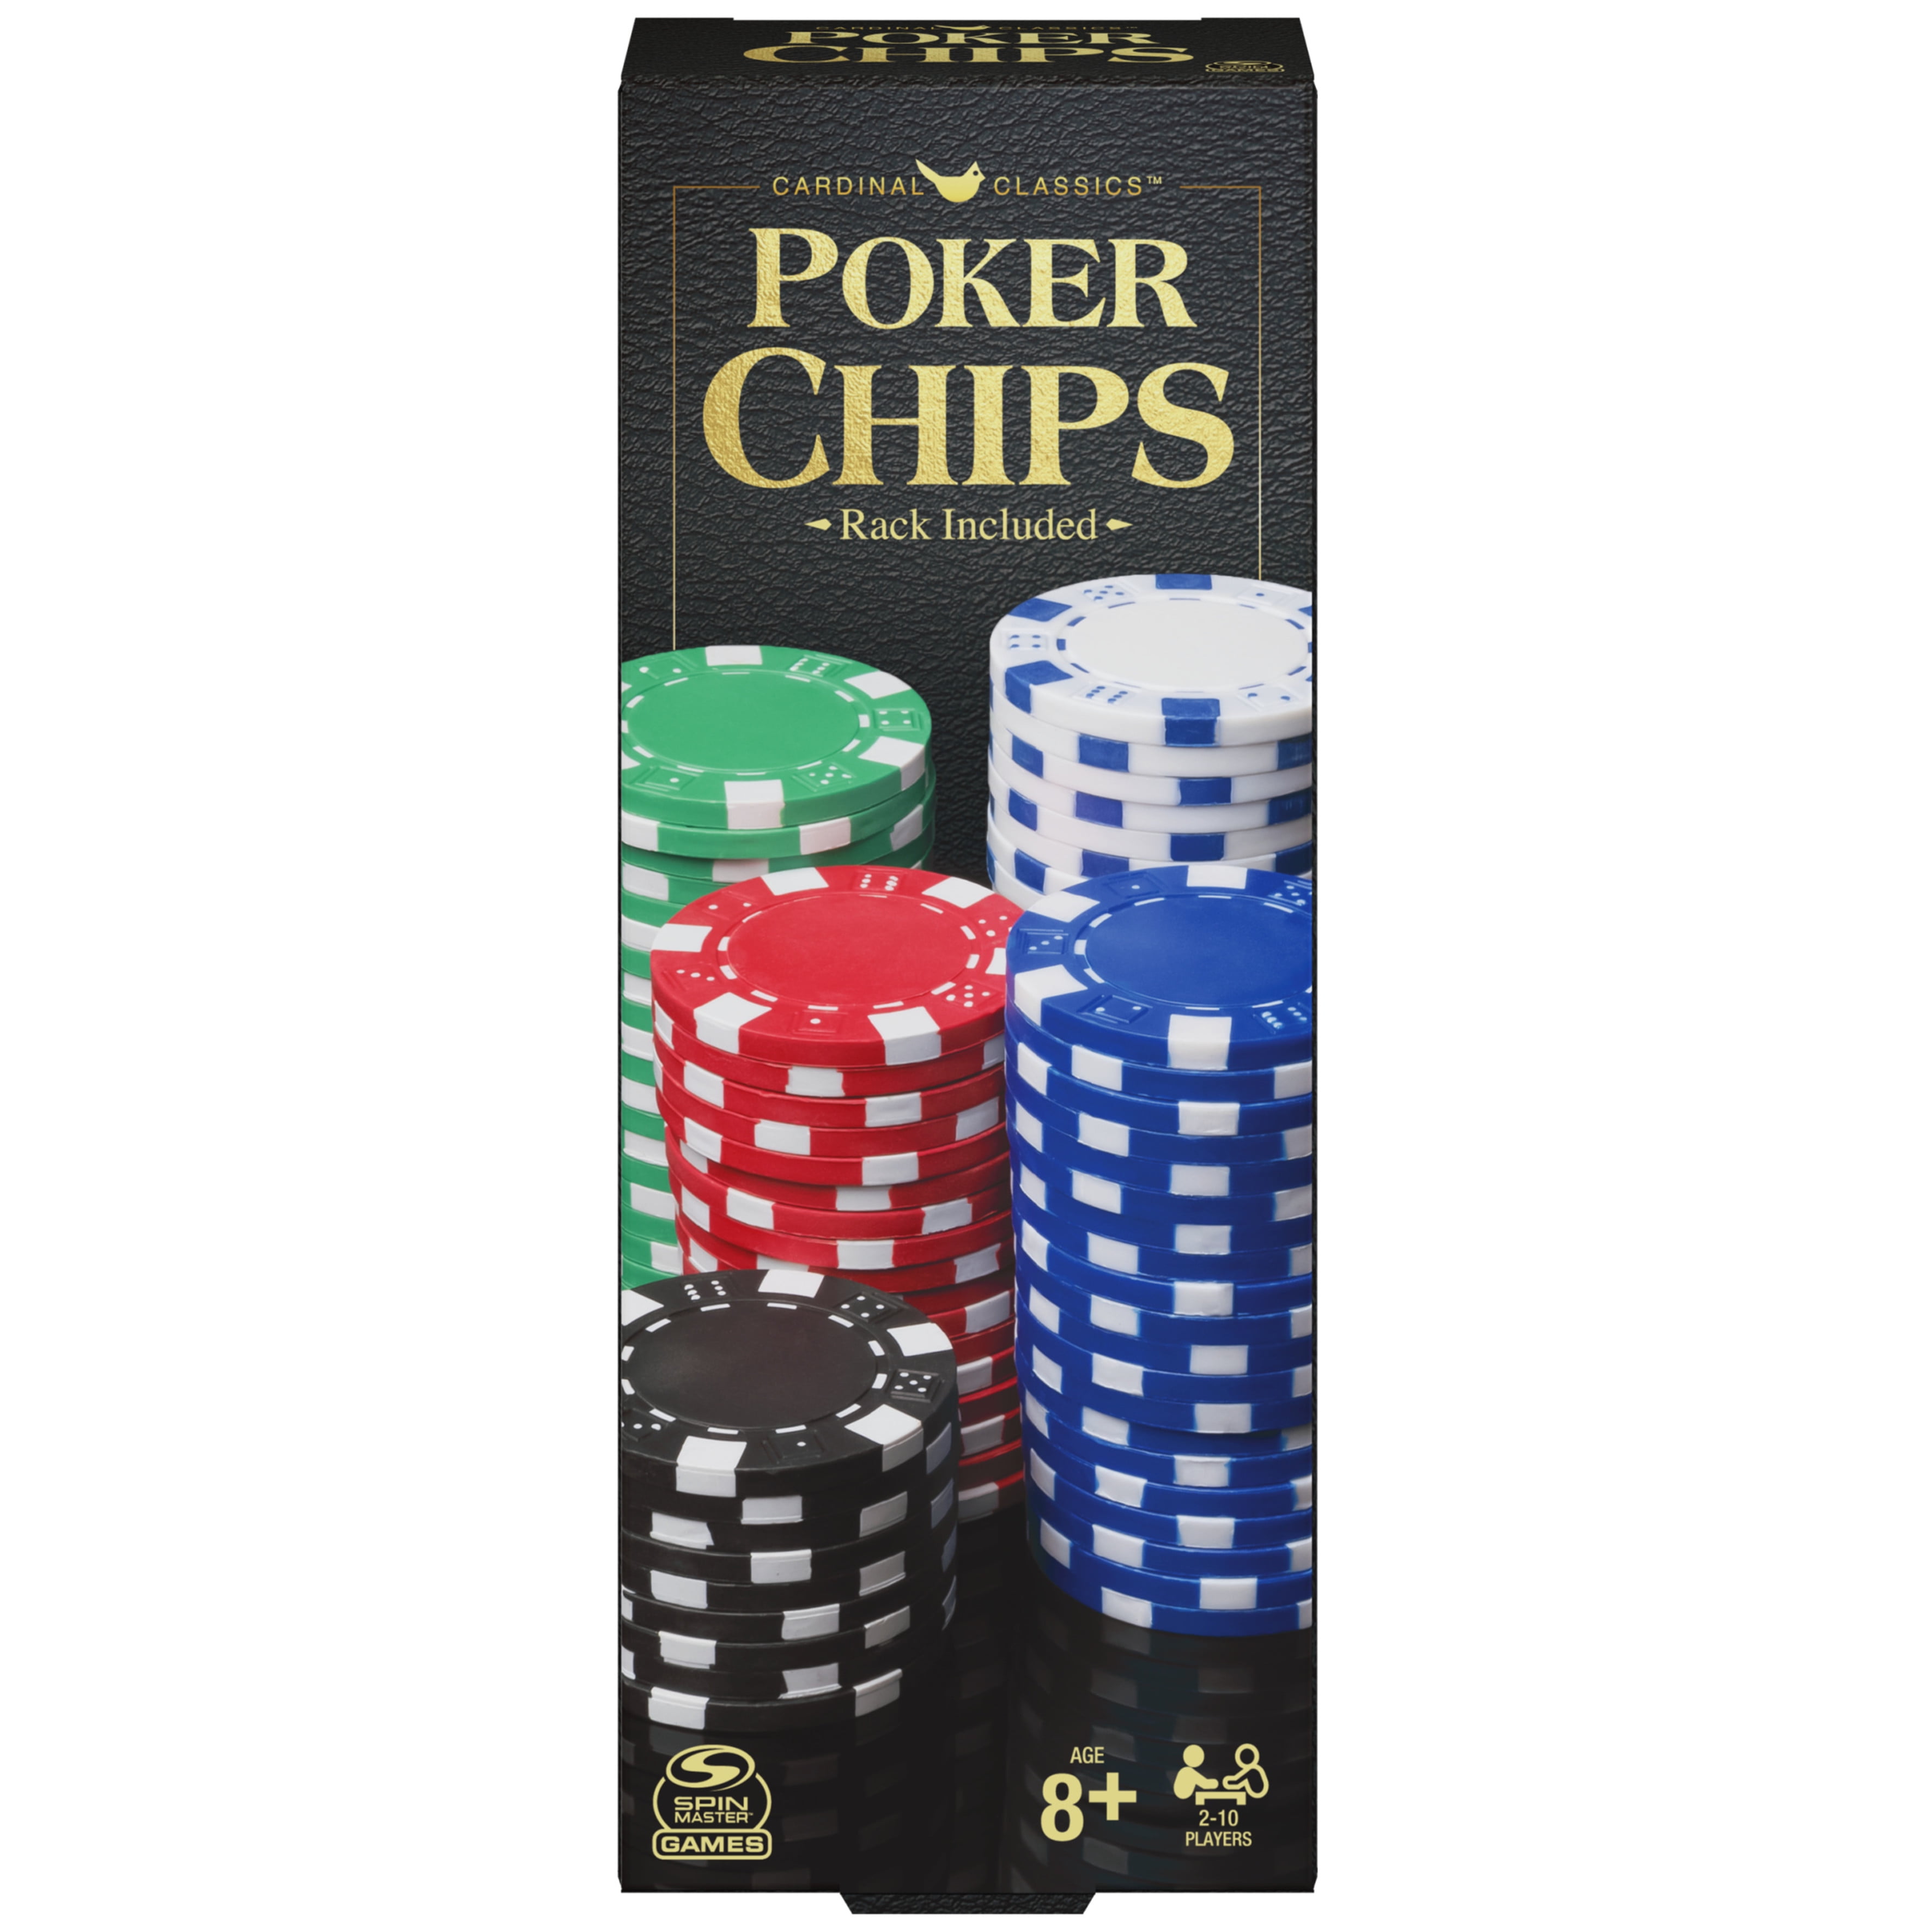 Get 1 Free 50 Yellow Interlocking Radial 2g Plastic Poker Chips New Buy 2 